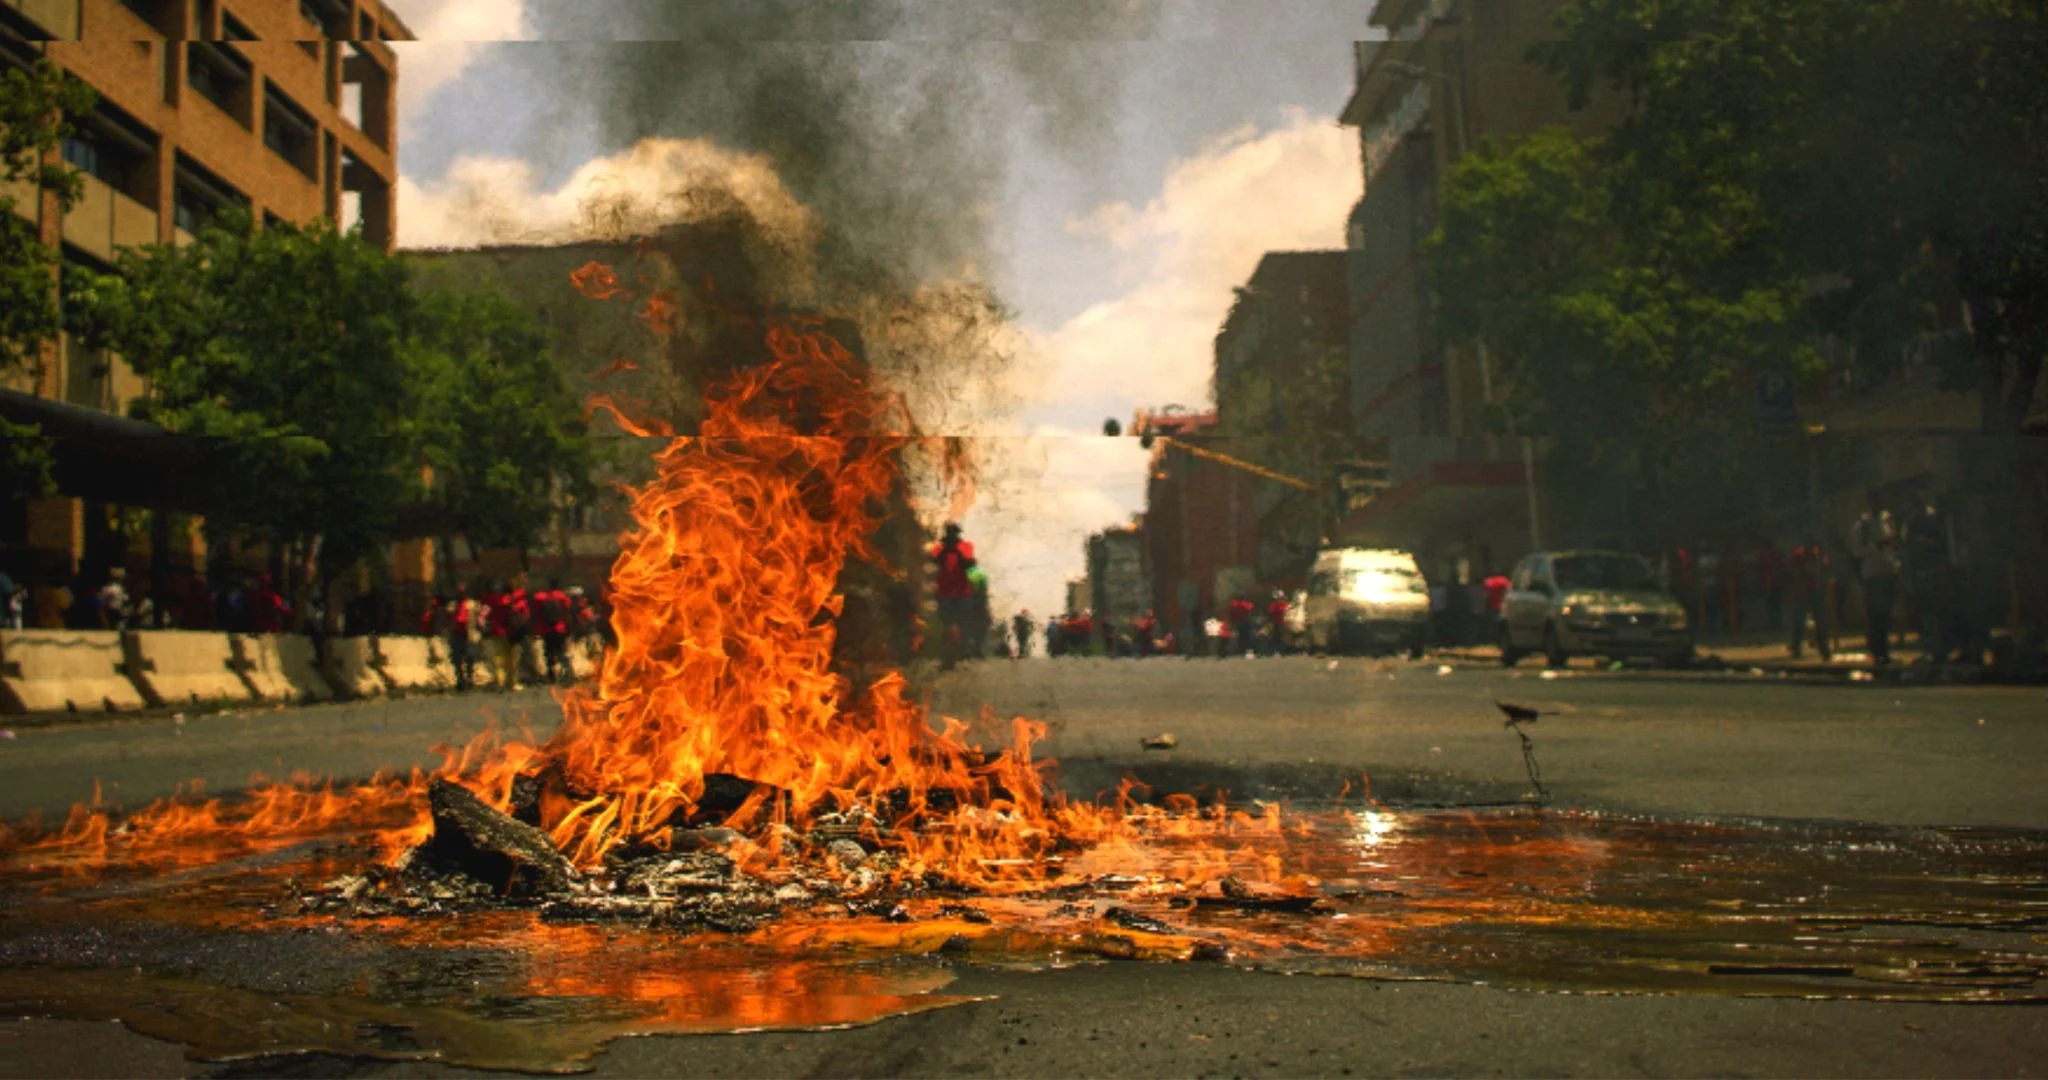 A pile of junk burning in a road. Source: Pawel Janiek / Unsplash